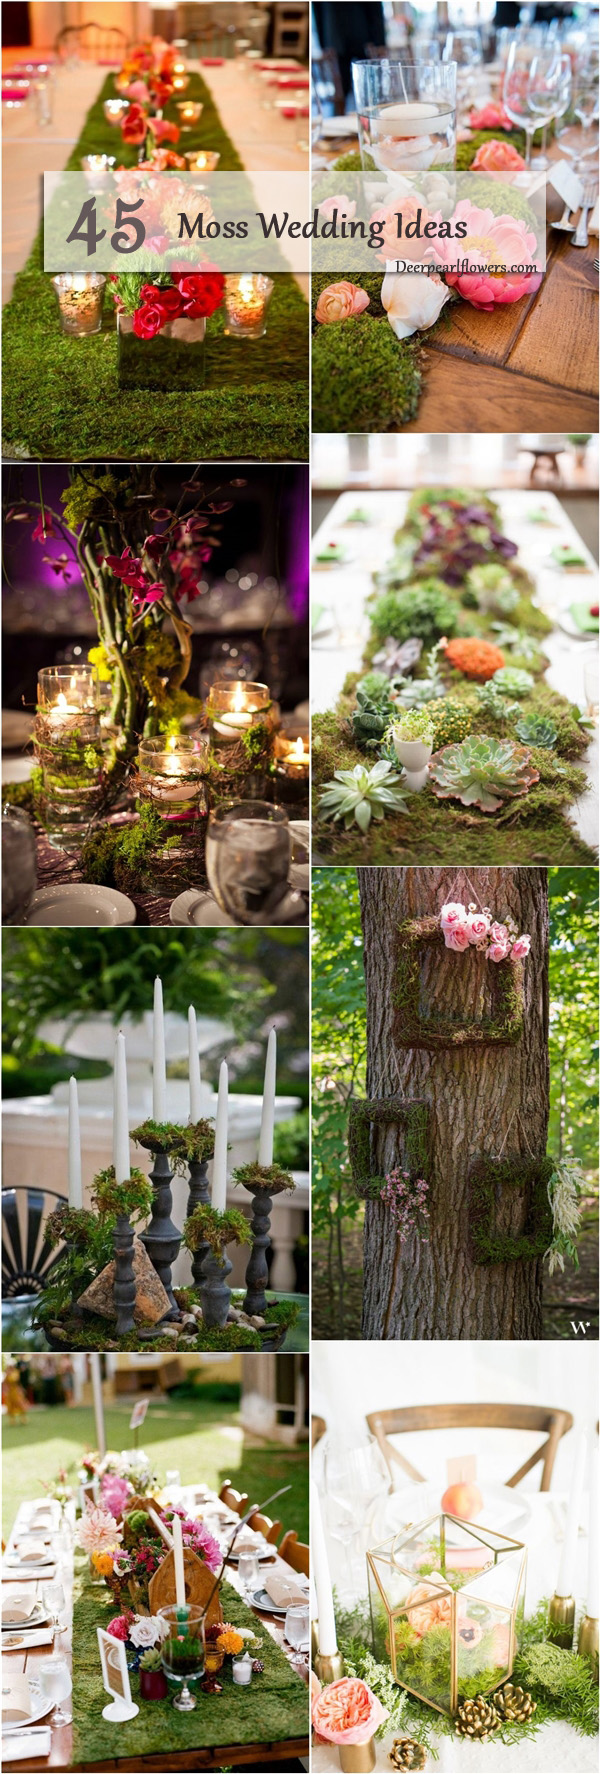 woodland moss wedding ideas